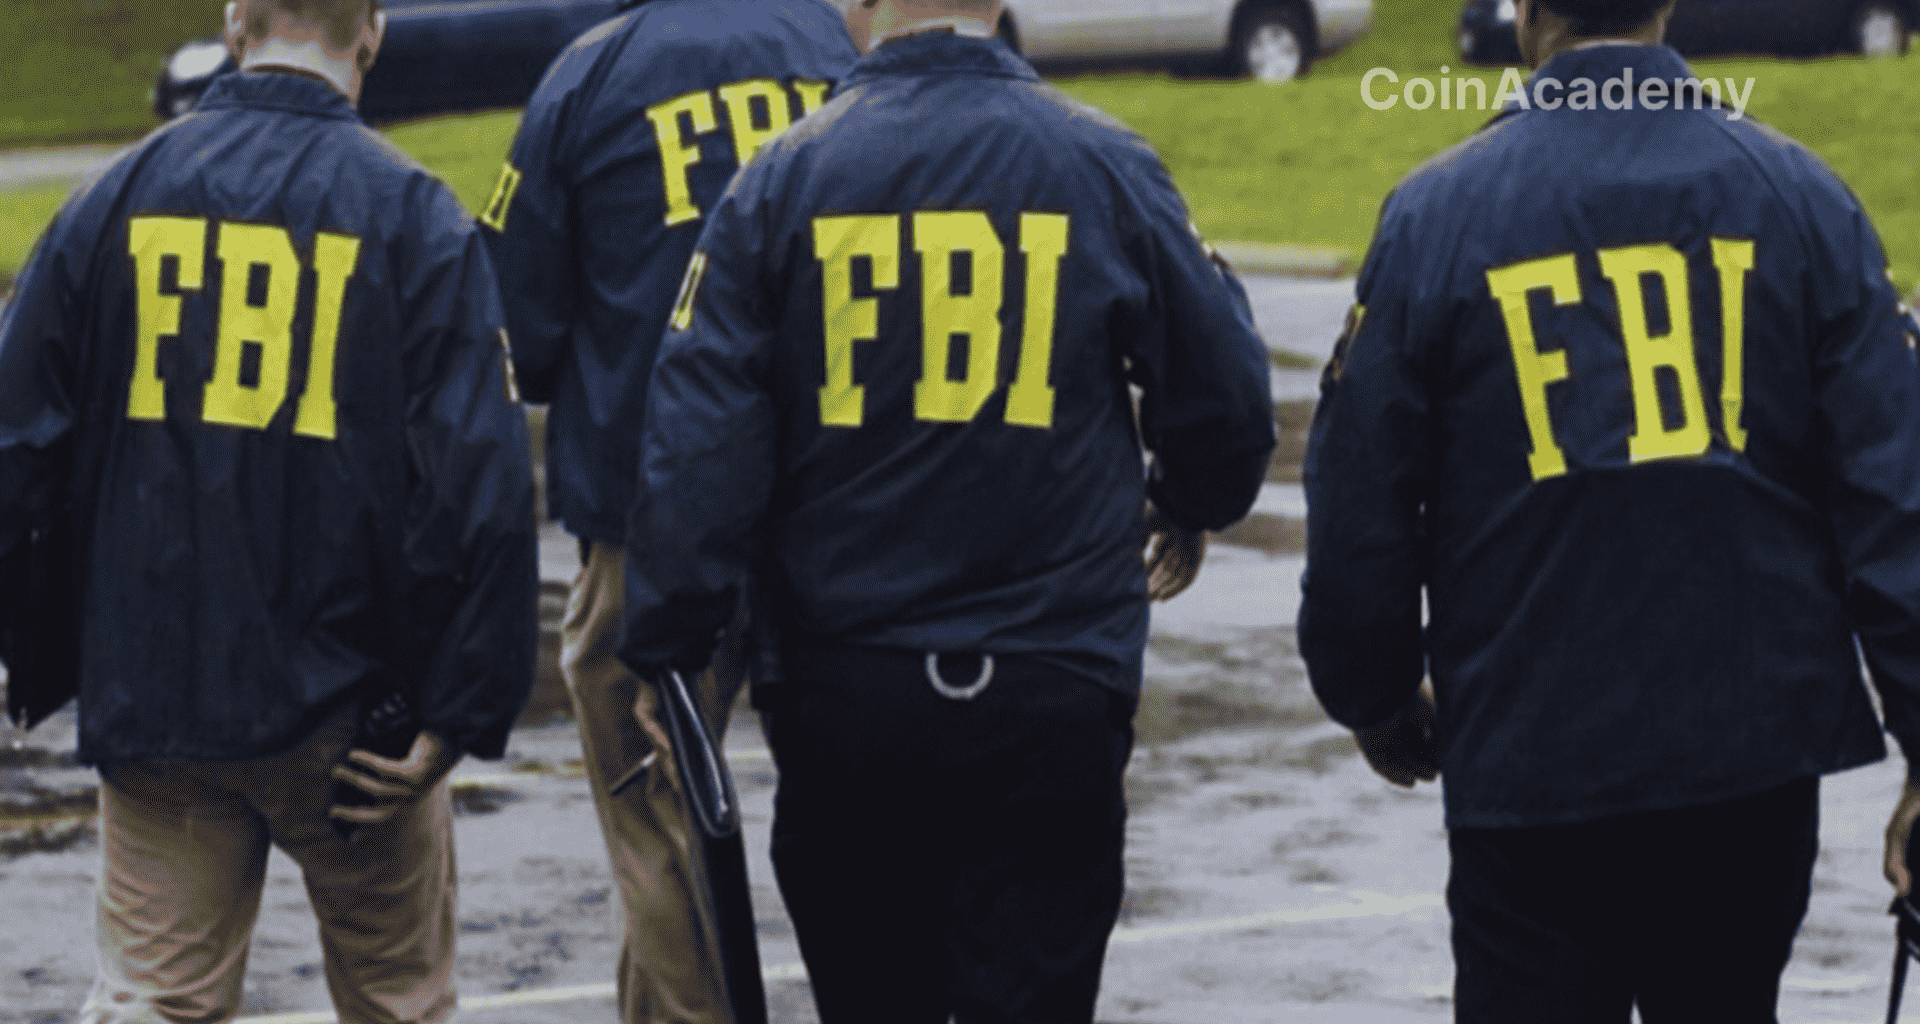 fbi prison fraude crypto